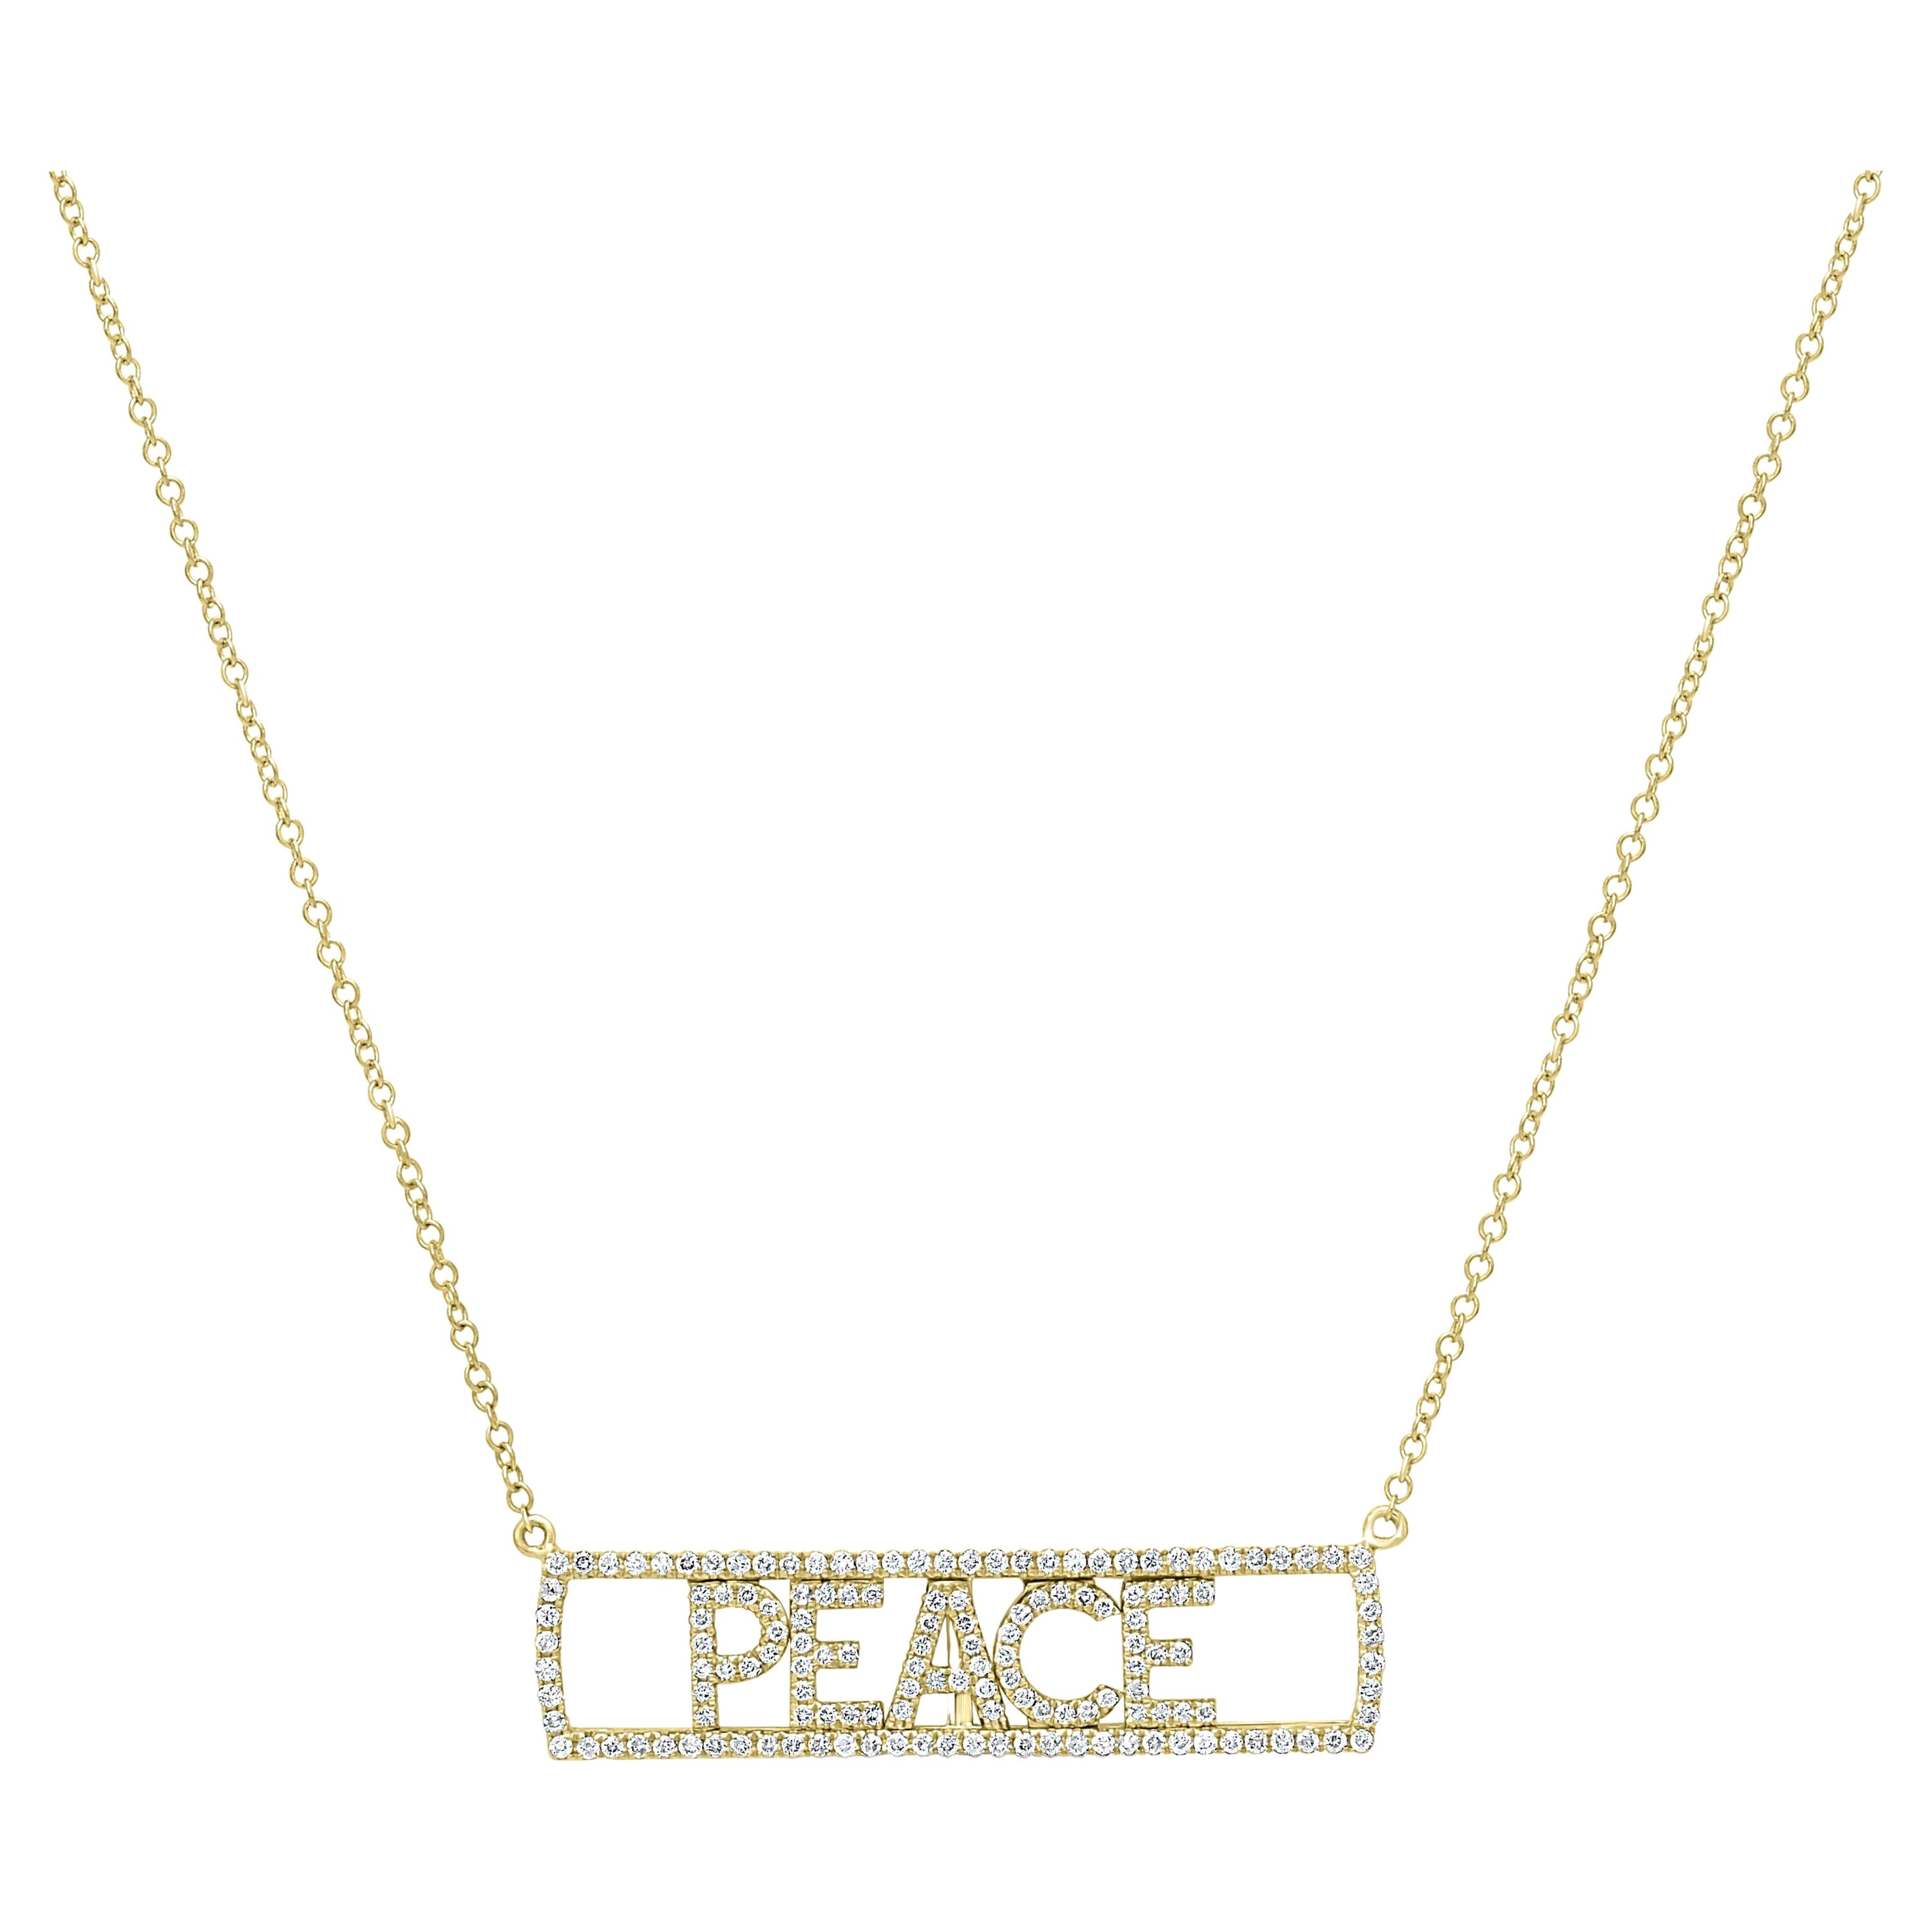 Luxle 14k Gold 3/8 Carat T.W. Diamond "Peace" Necklace For Sale